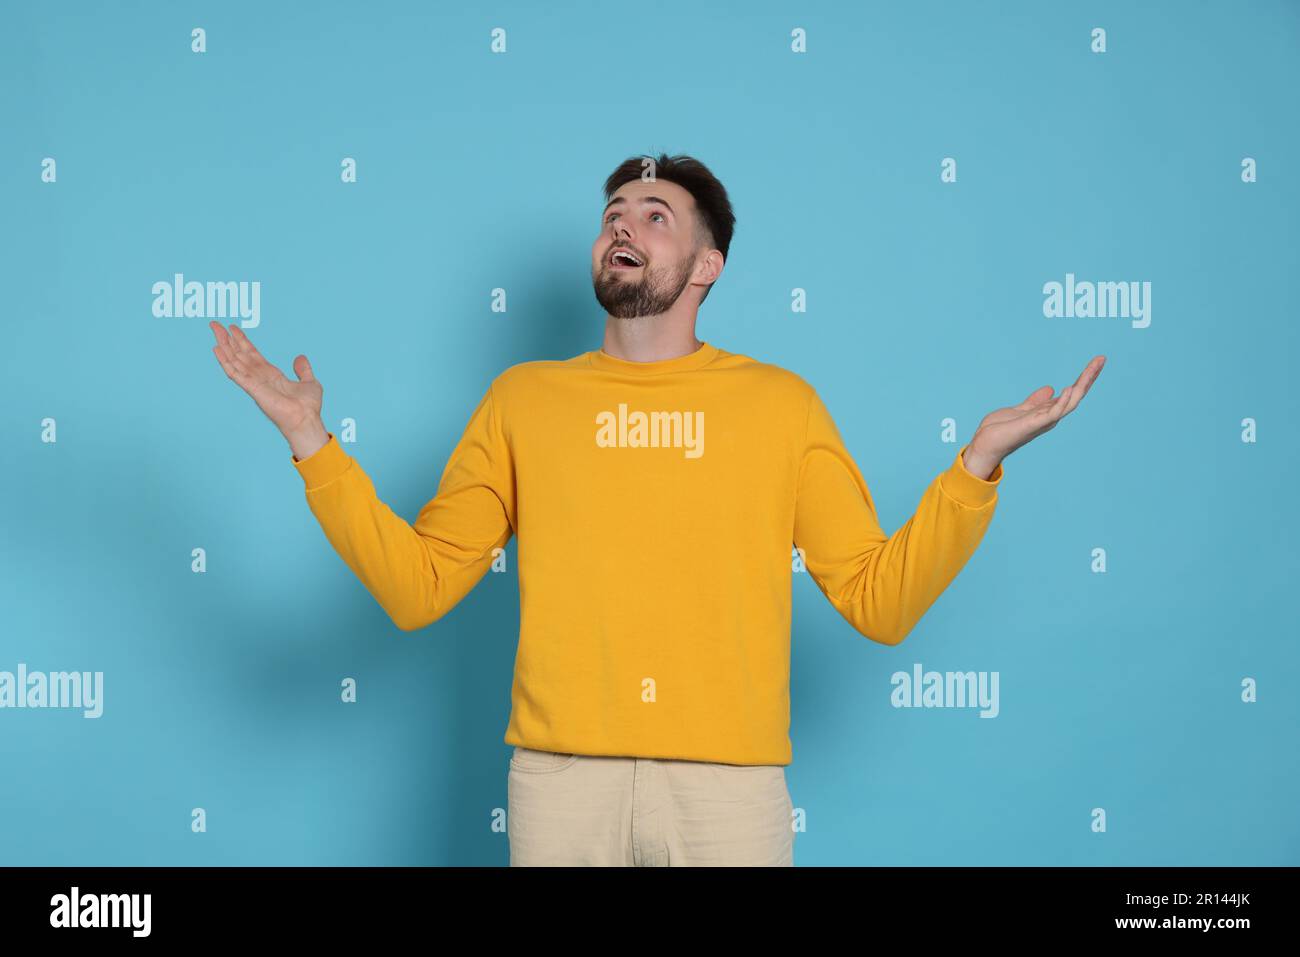 Surprised man in yellow sweatshirt on light blue background Stock Photo